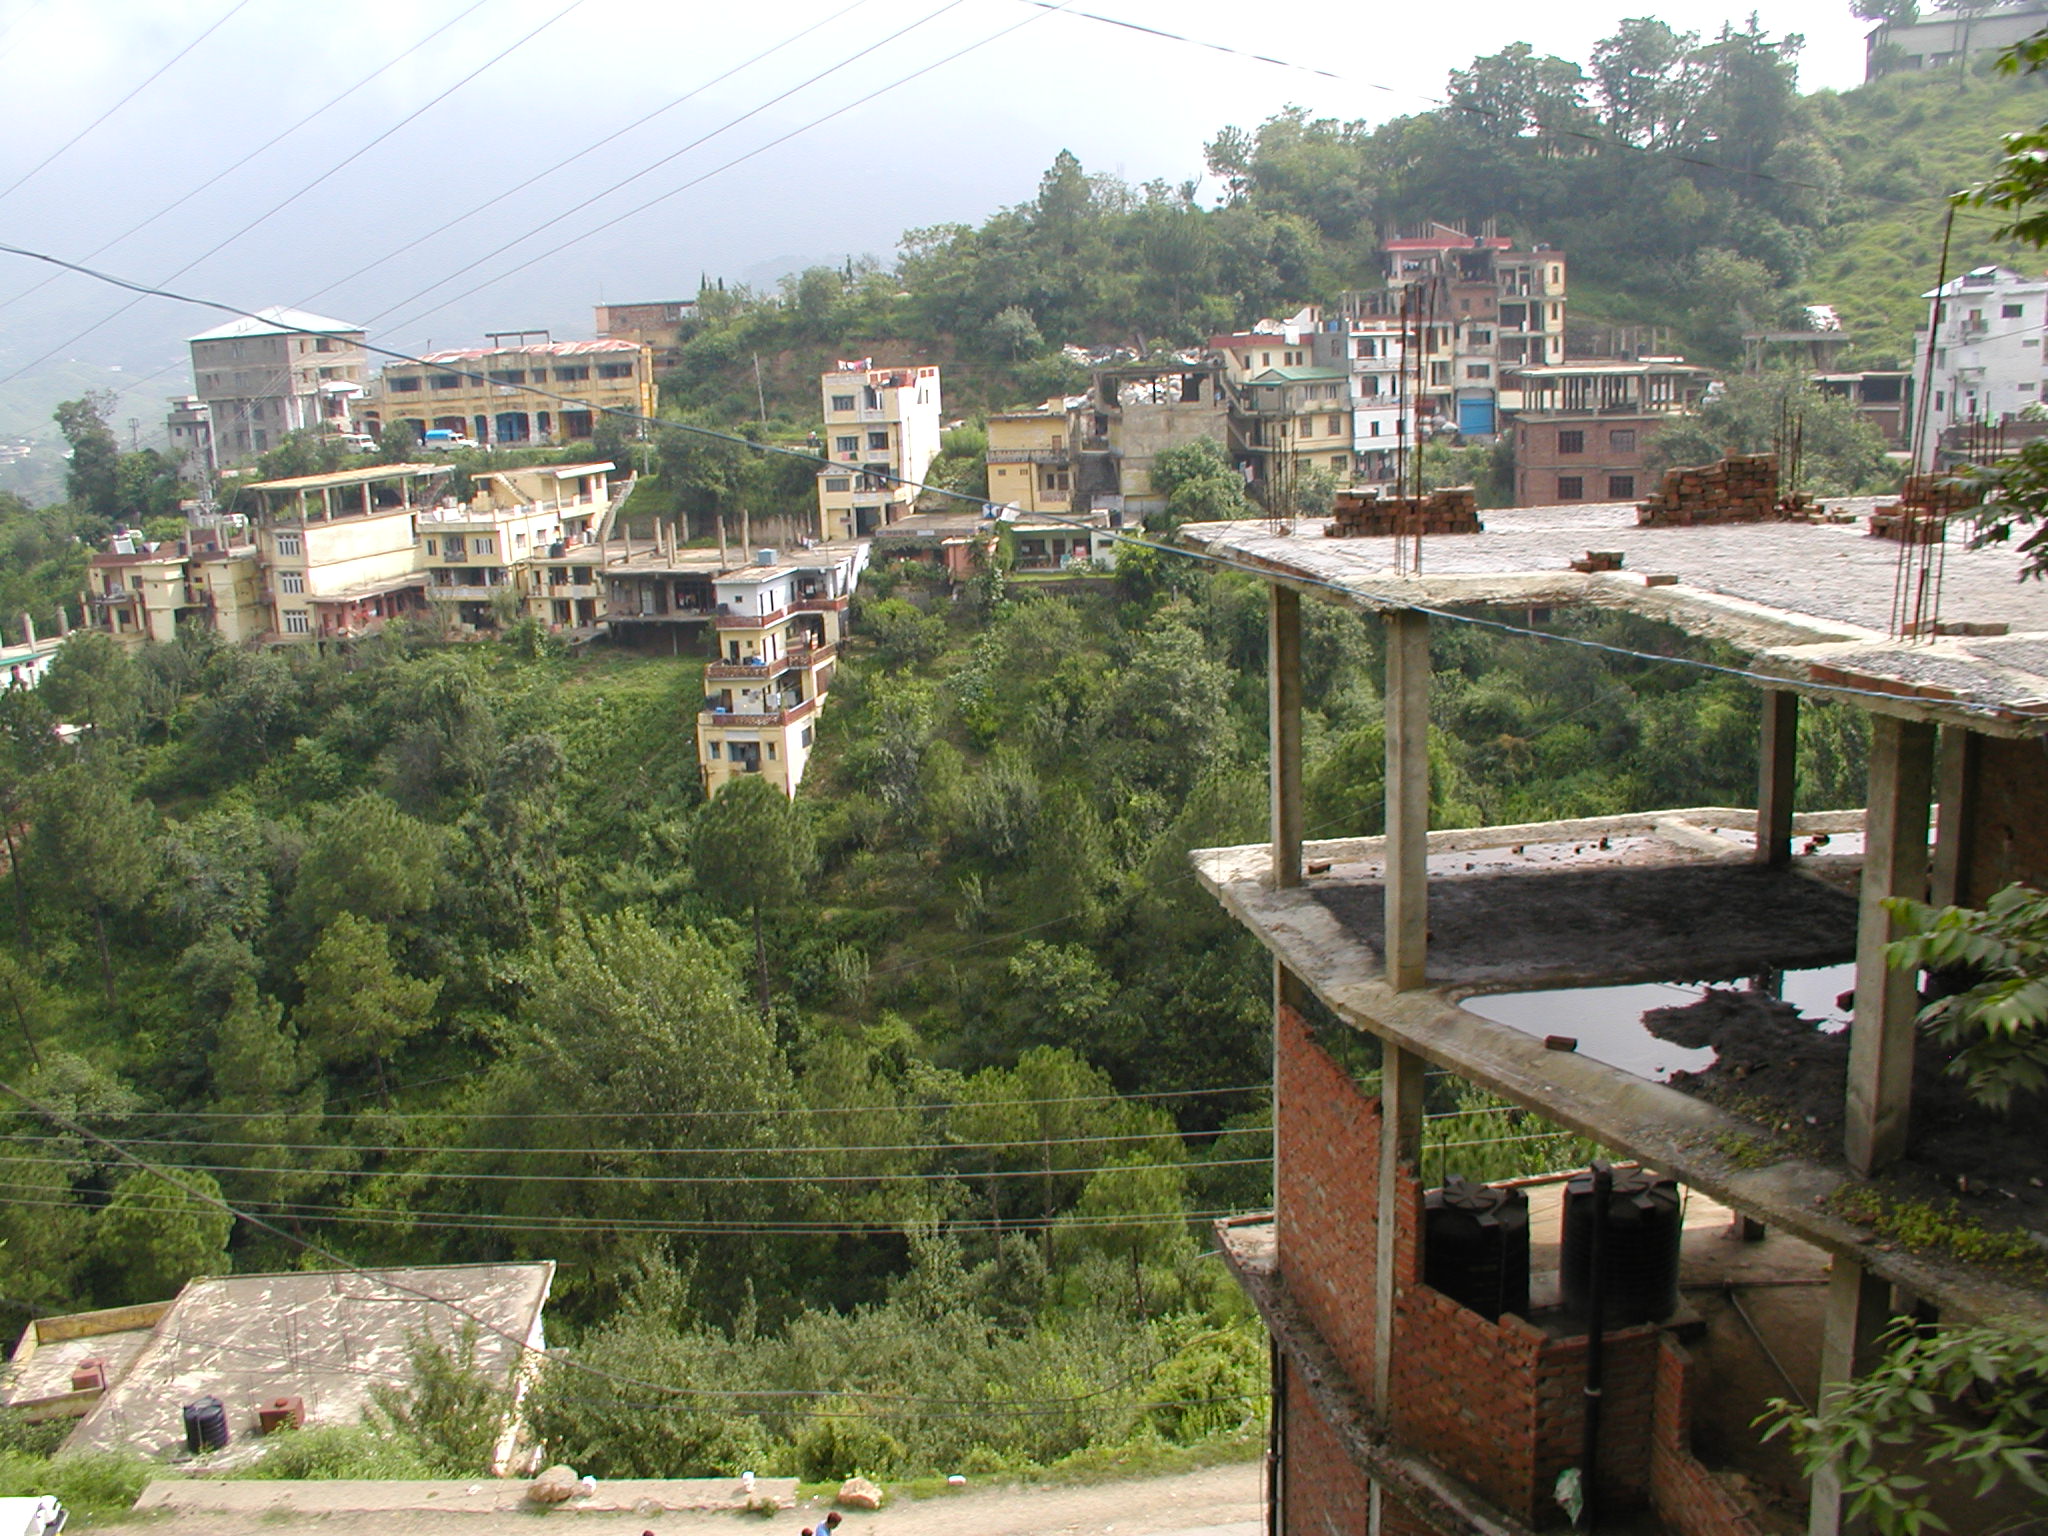 The cit of Shimla